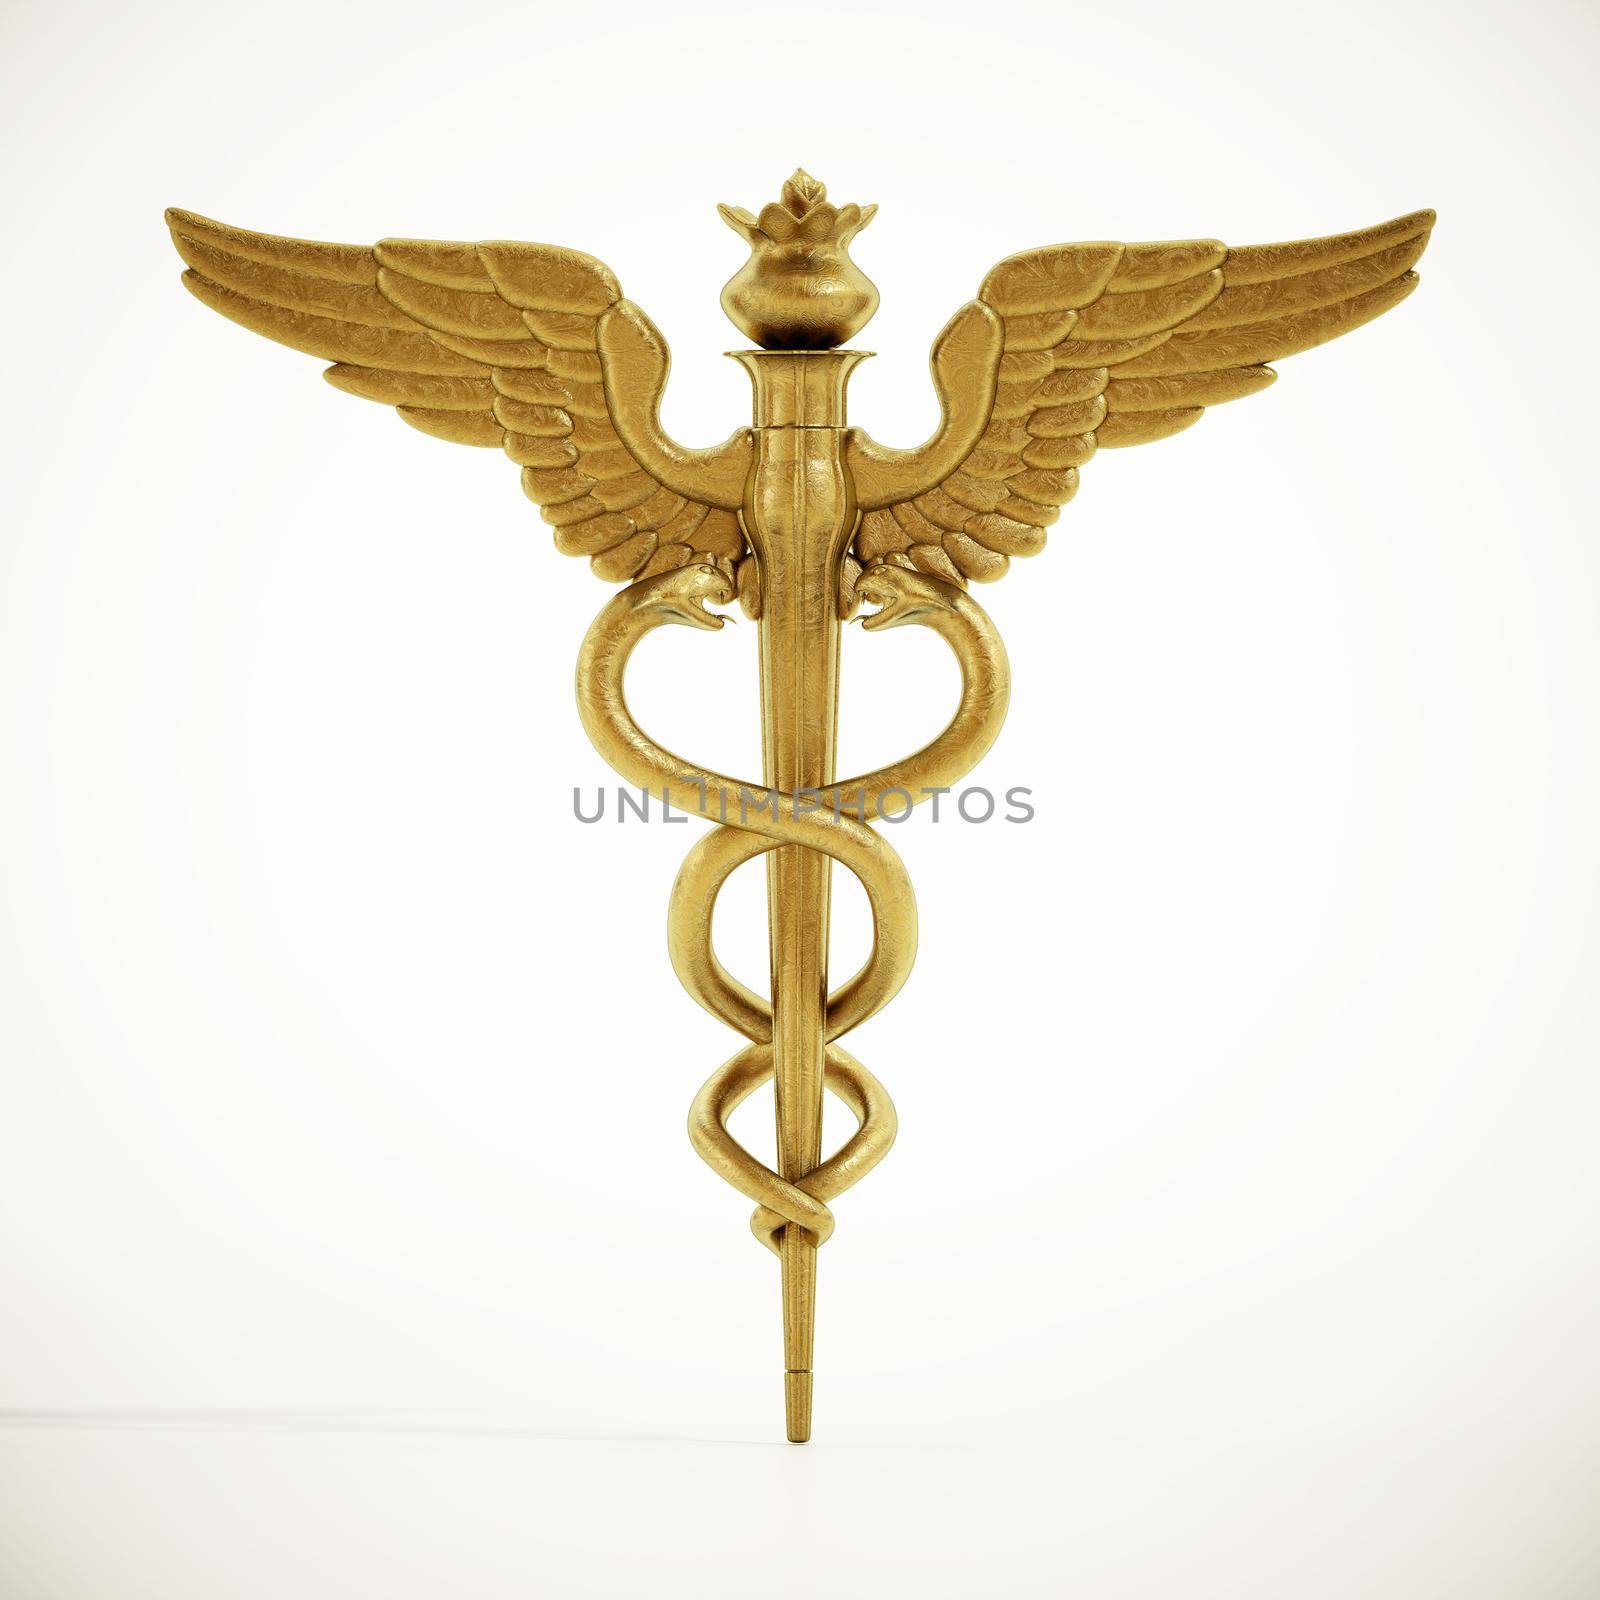 Gold caduceus symbol isolated on white background. 3D illustration.